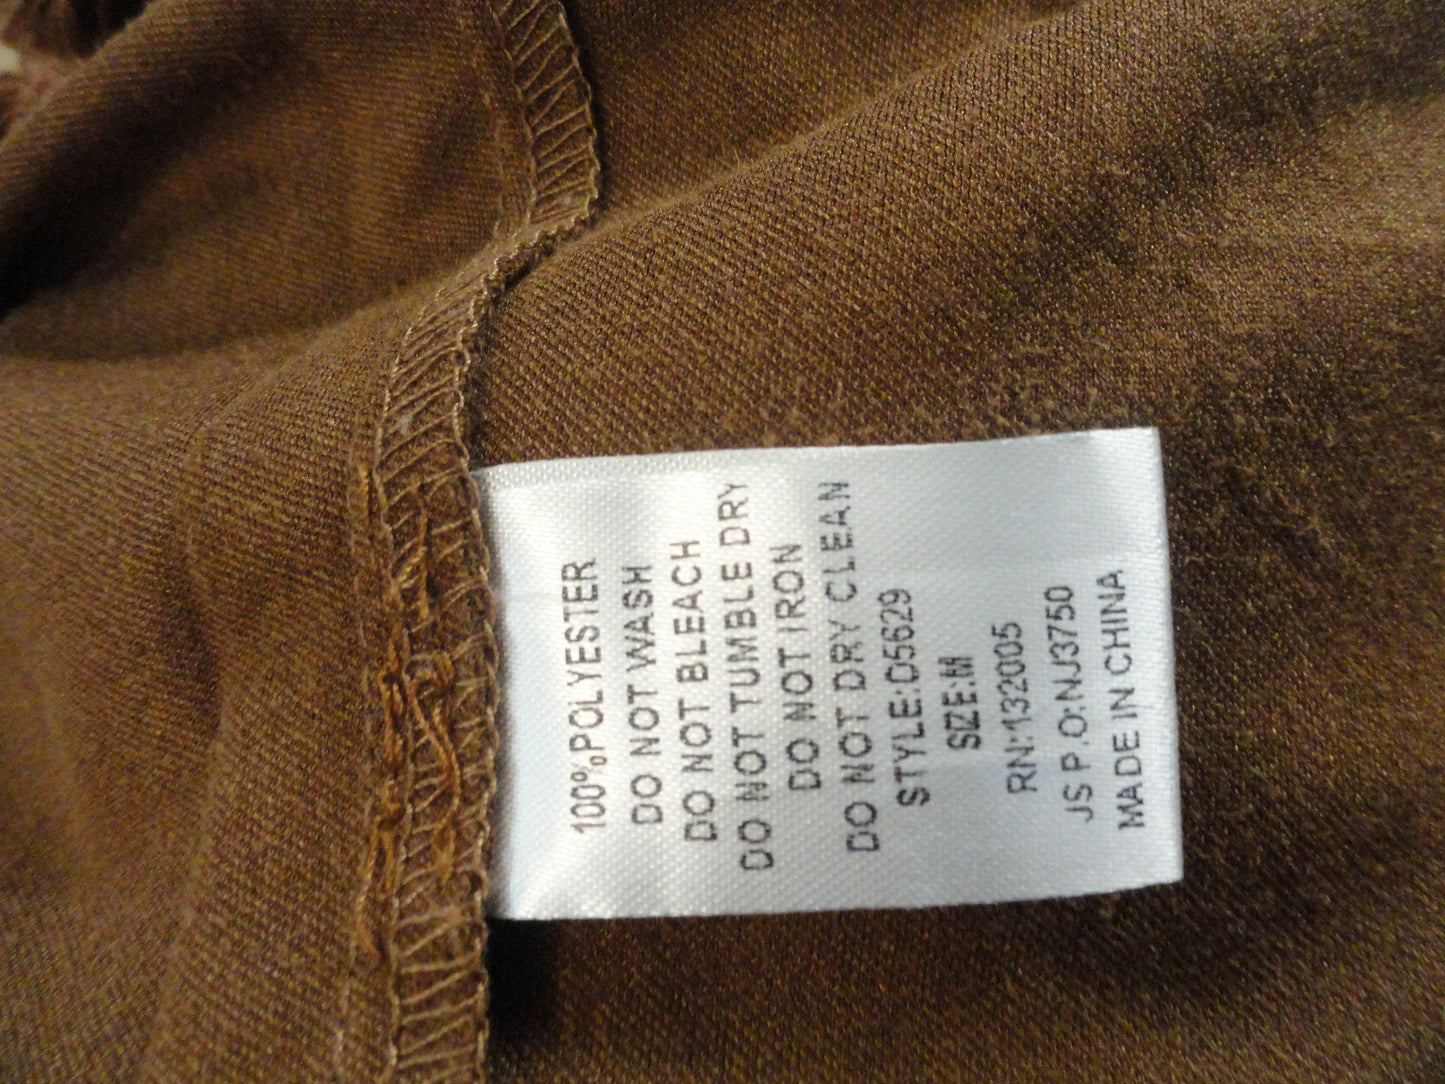 Entro Brown Halter Neck Dress Size Medium SKU 001004-13